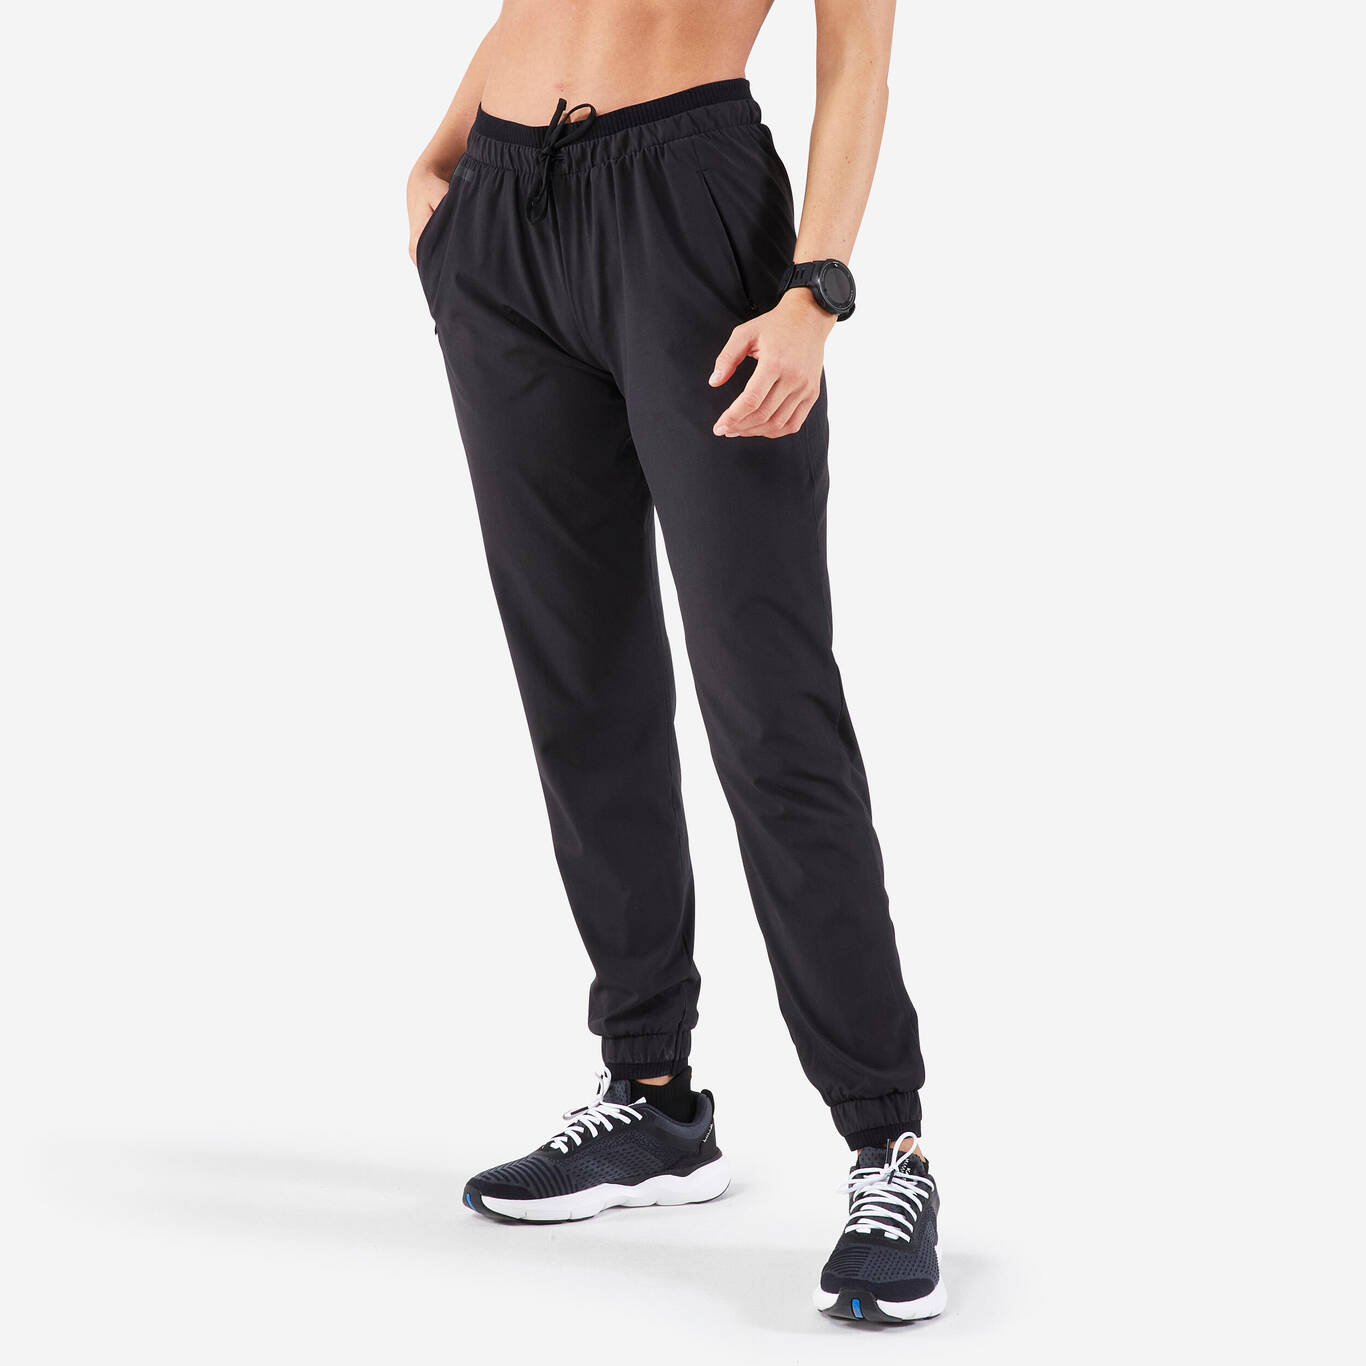 Celana Panjang Lari Jogging Breathable Wanita Dry - hitam